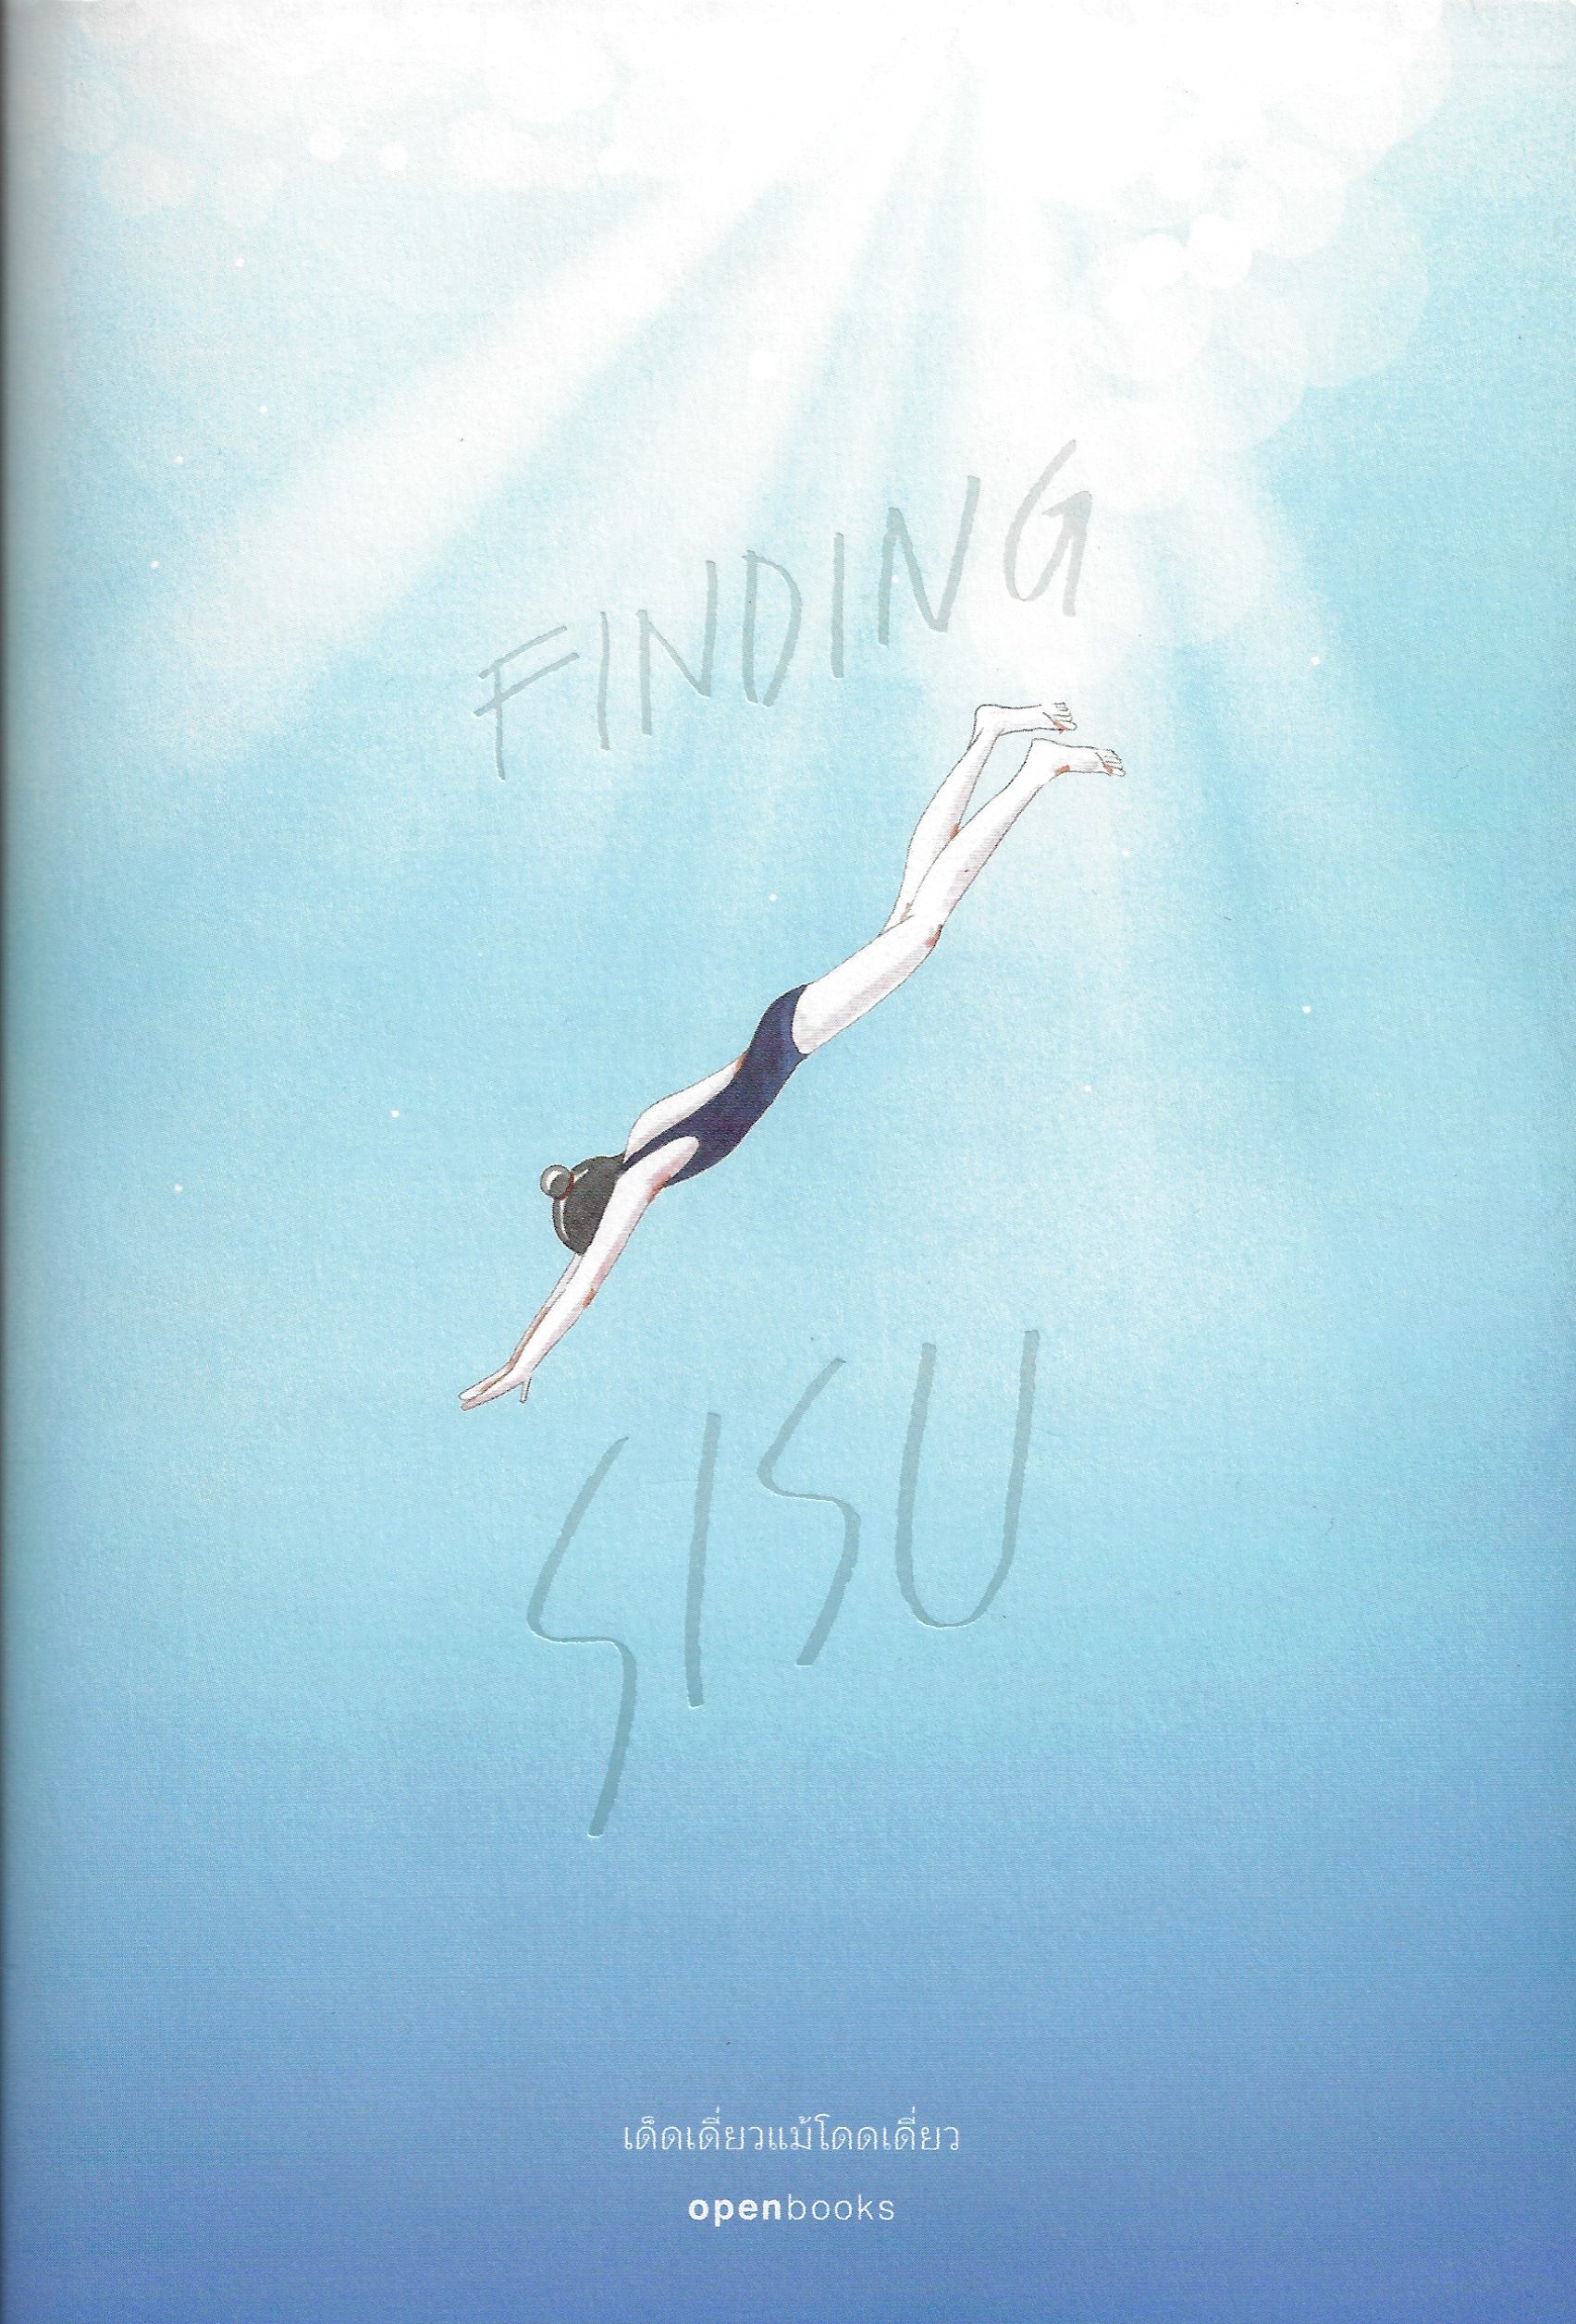 Finding SISU เด็ดเดี่ยวแม้โดดเดี่ยว / Katja Pantzar / กัญญ์ชลา นาวานุเคราะห์ แปล